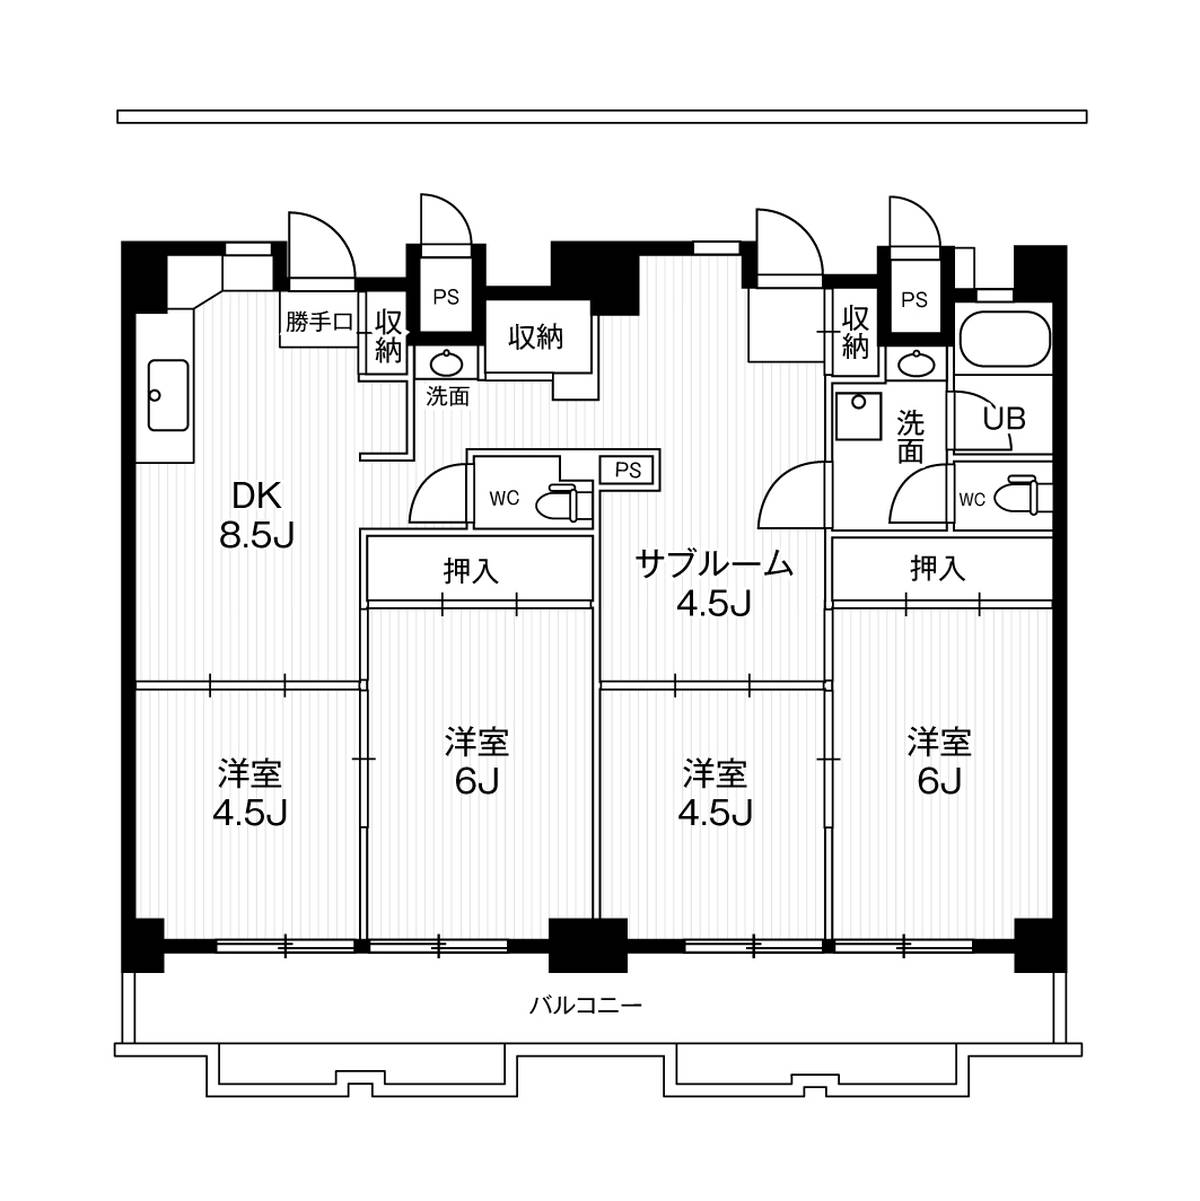 4DK floorplan of Village House Ichinomiya Tower in Ichinomiya-shi